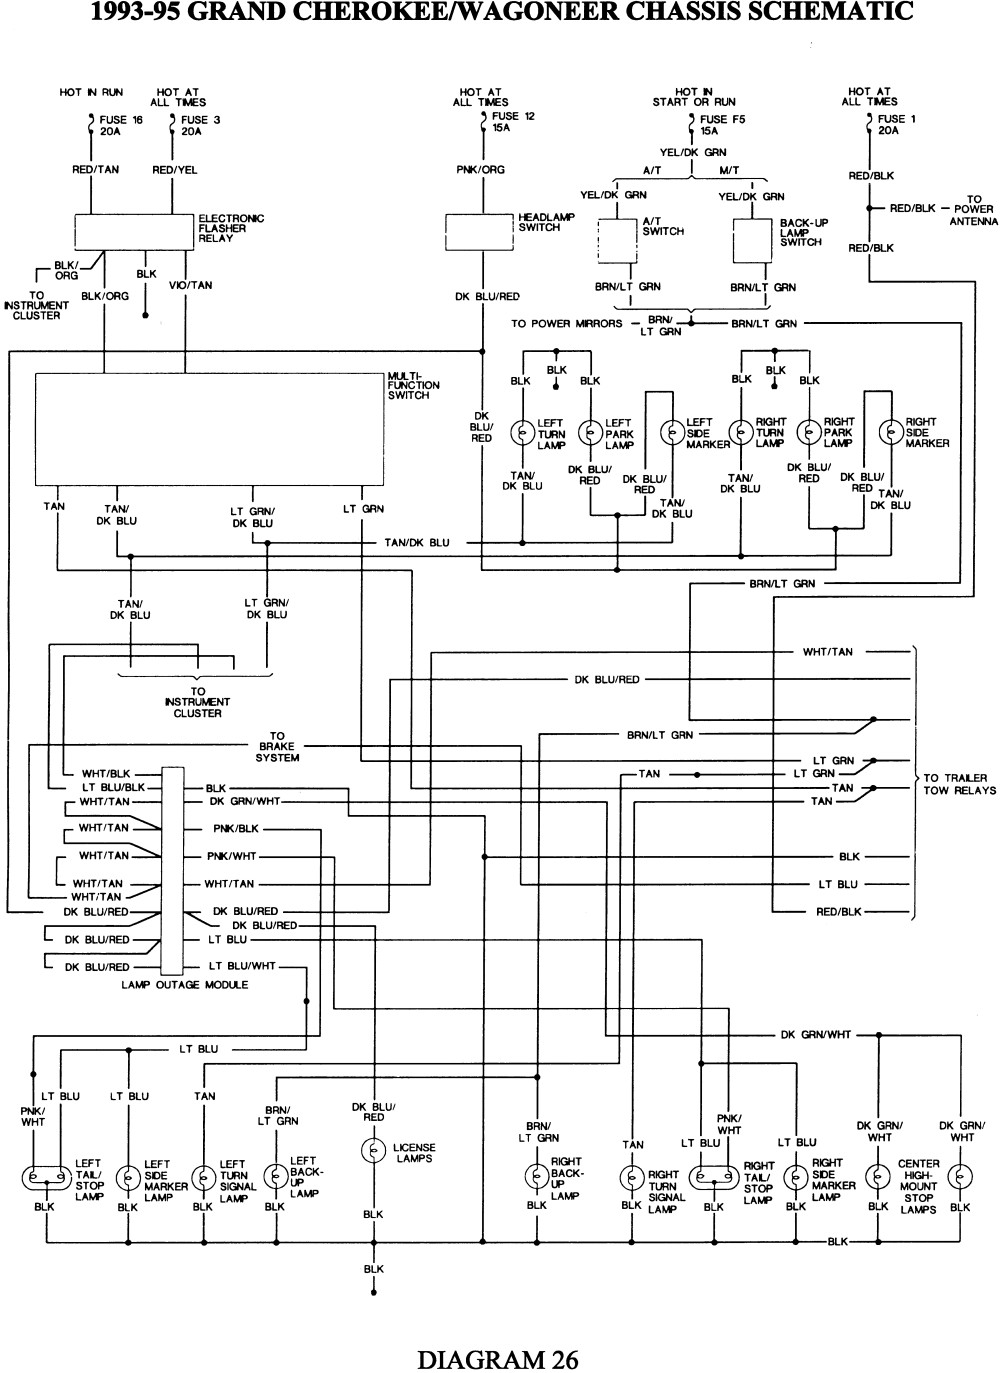 wj jeep tail light wiring diagram enthusiast wiring diagrams u2022 rh rasalibre co Doorbell Wiring Schematic Diagram 2001 Grand Cherokee Wiring Diagram